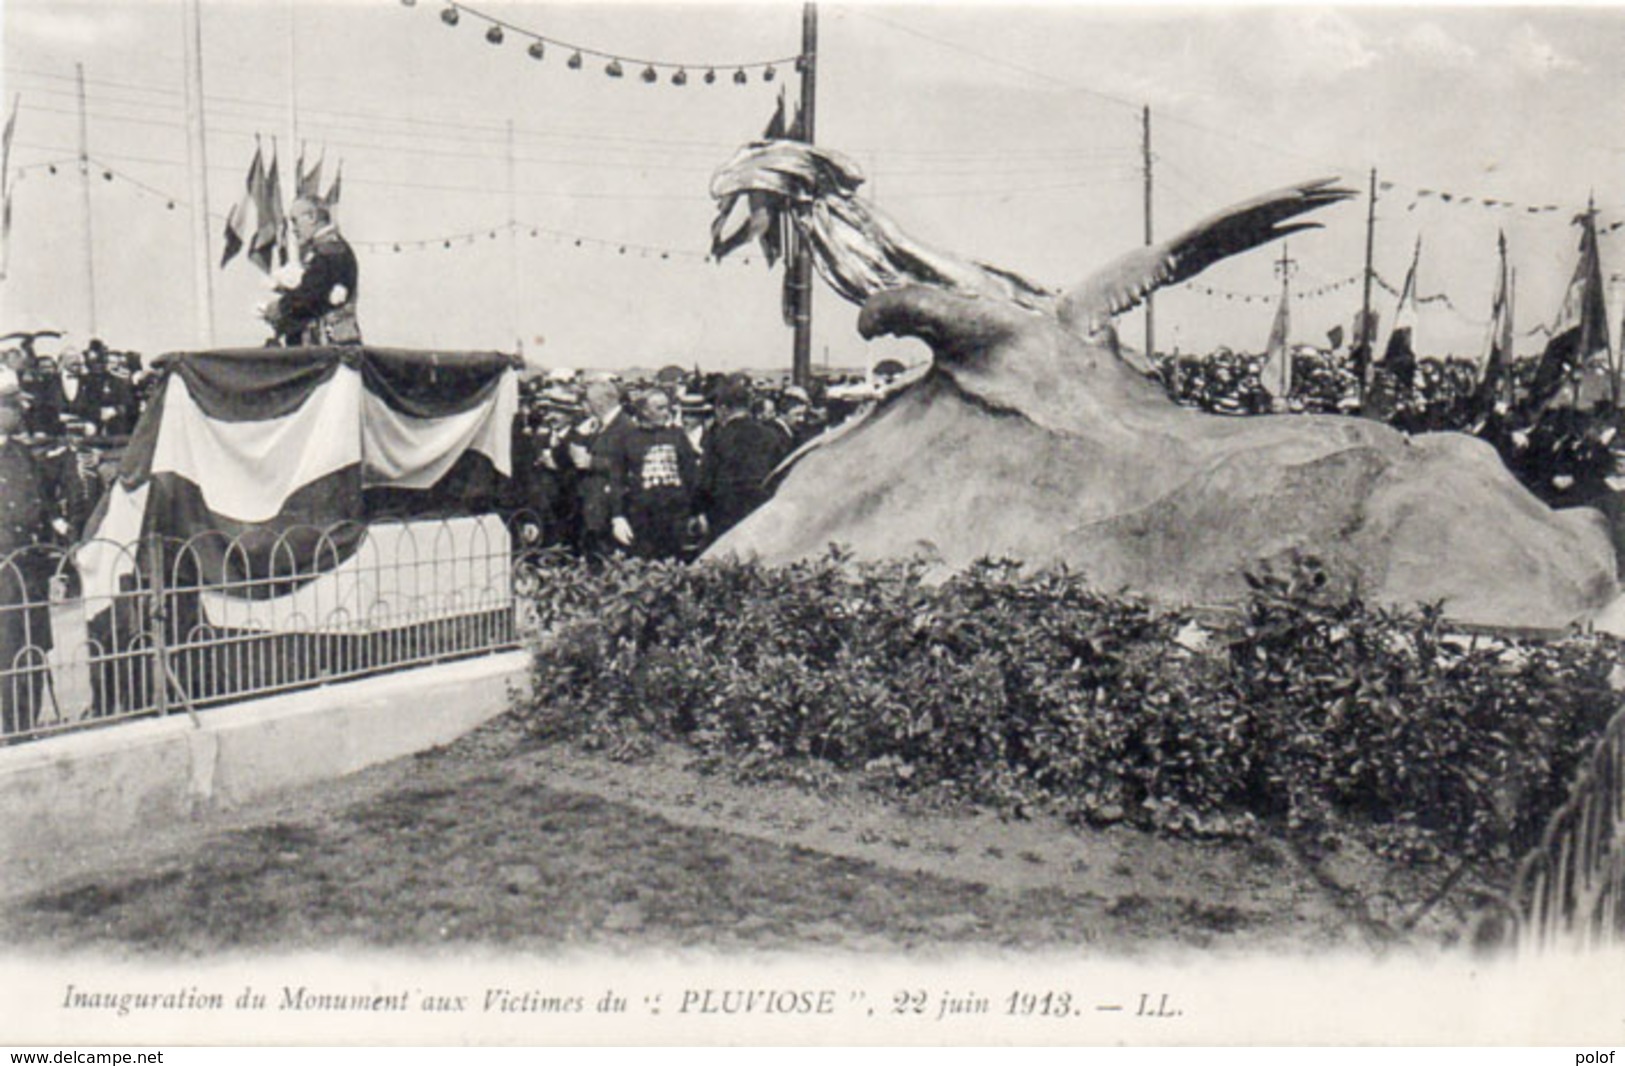 Inauguration Du Monument Aux Victimes Du "PLUVIOSE" Sous Marin -22 Juin 1913   (106657) - Inaugurations